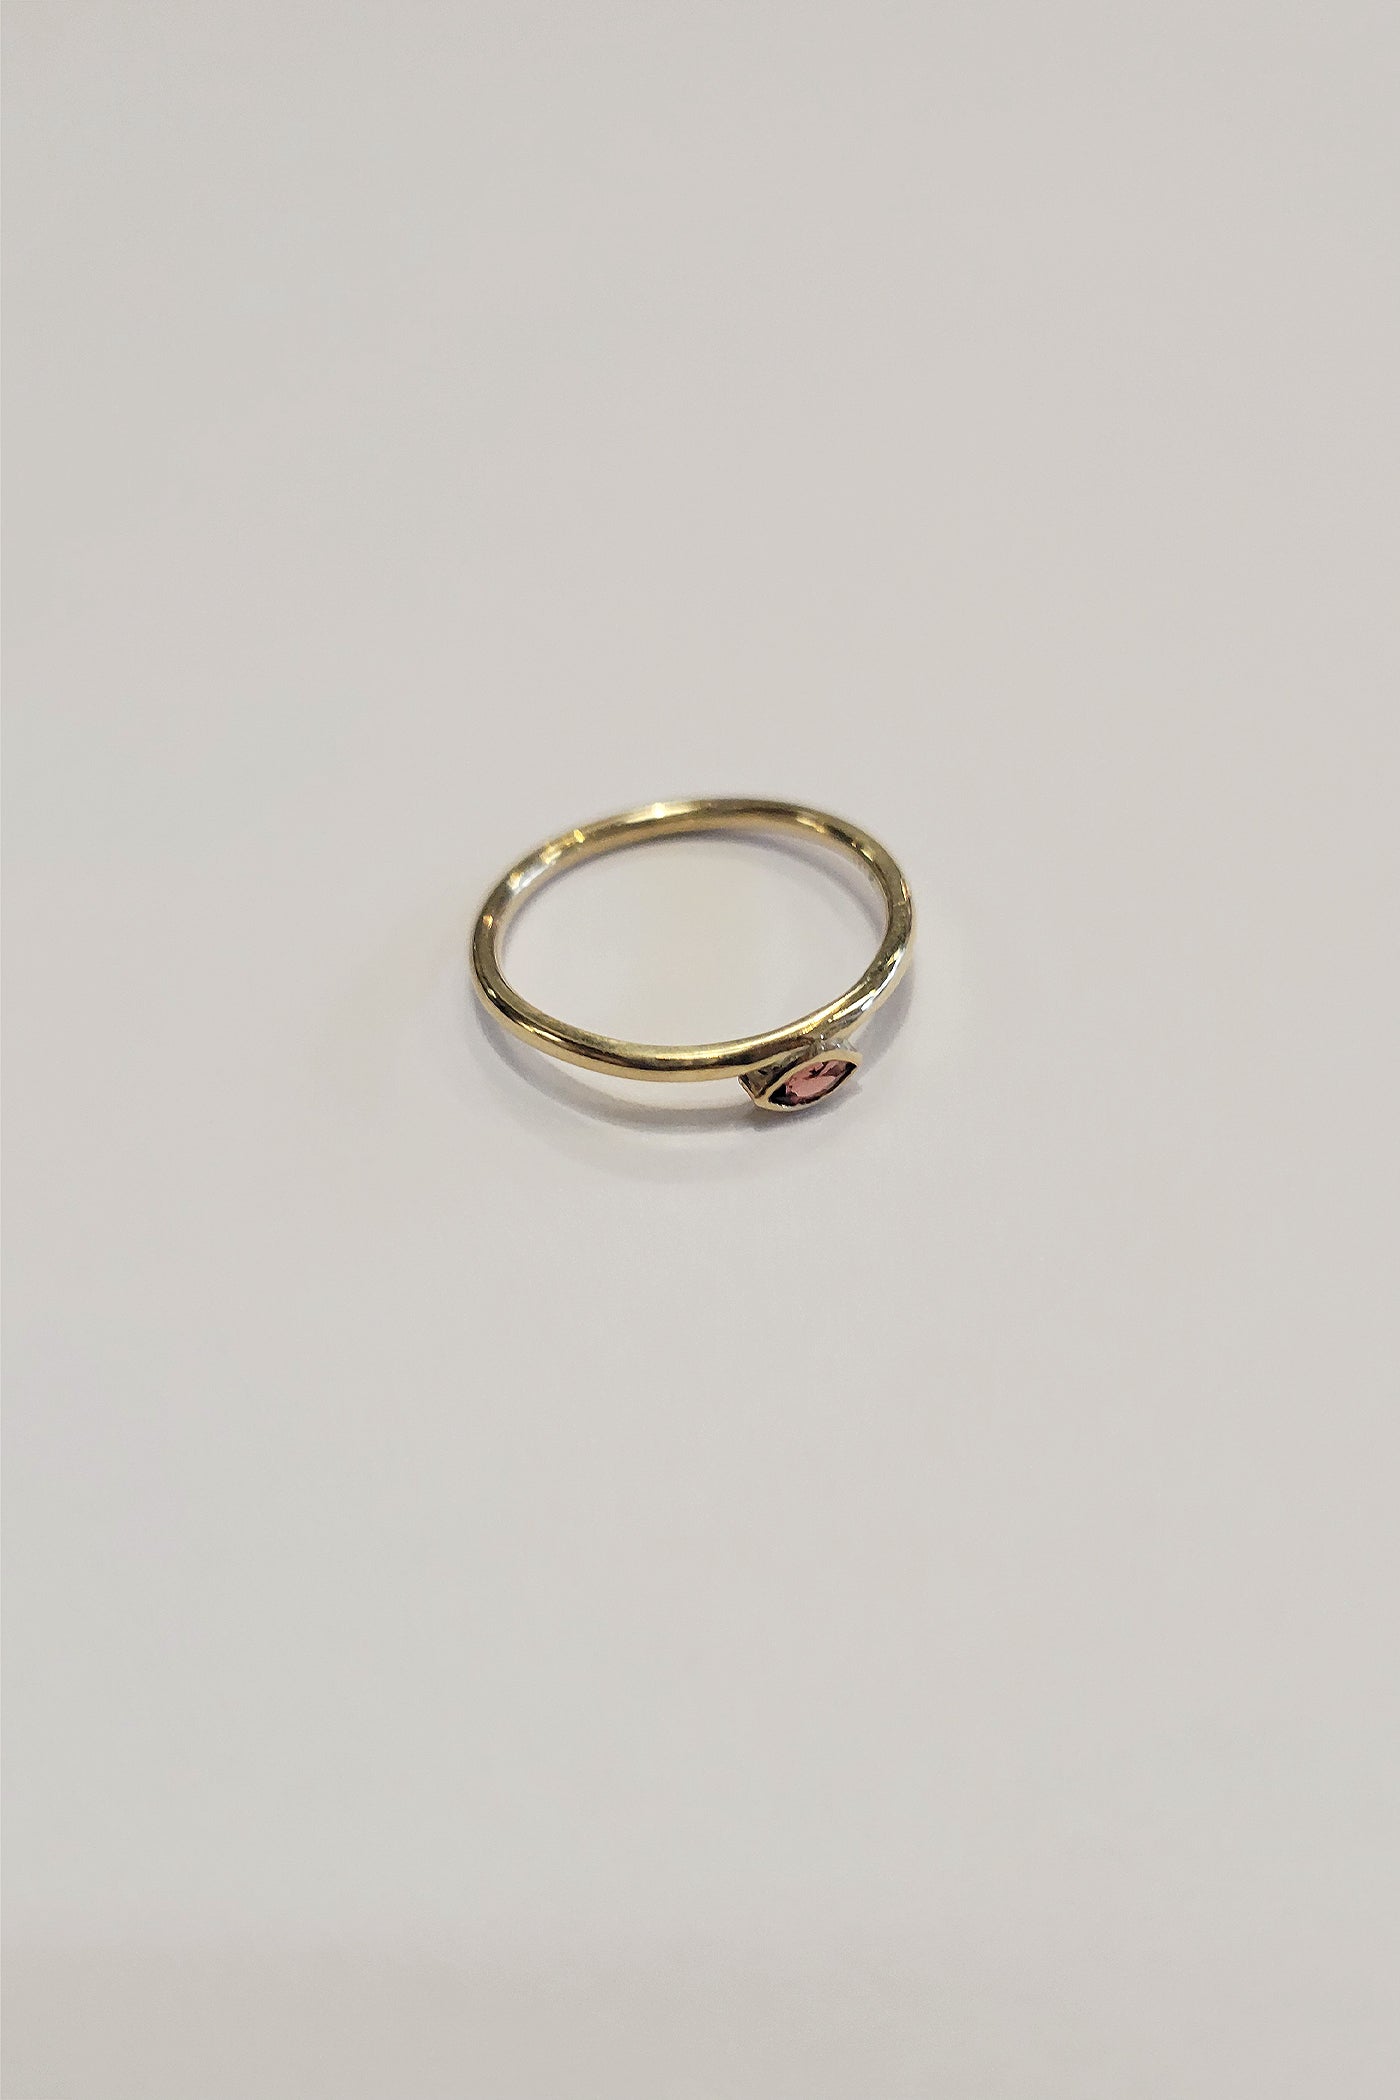 Sadie Jo Jewelry Co. Garnet Marquis Ring